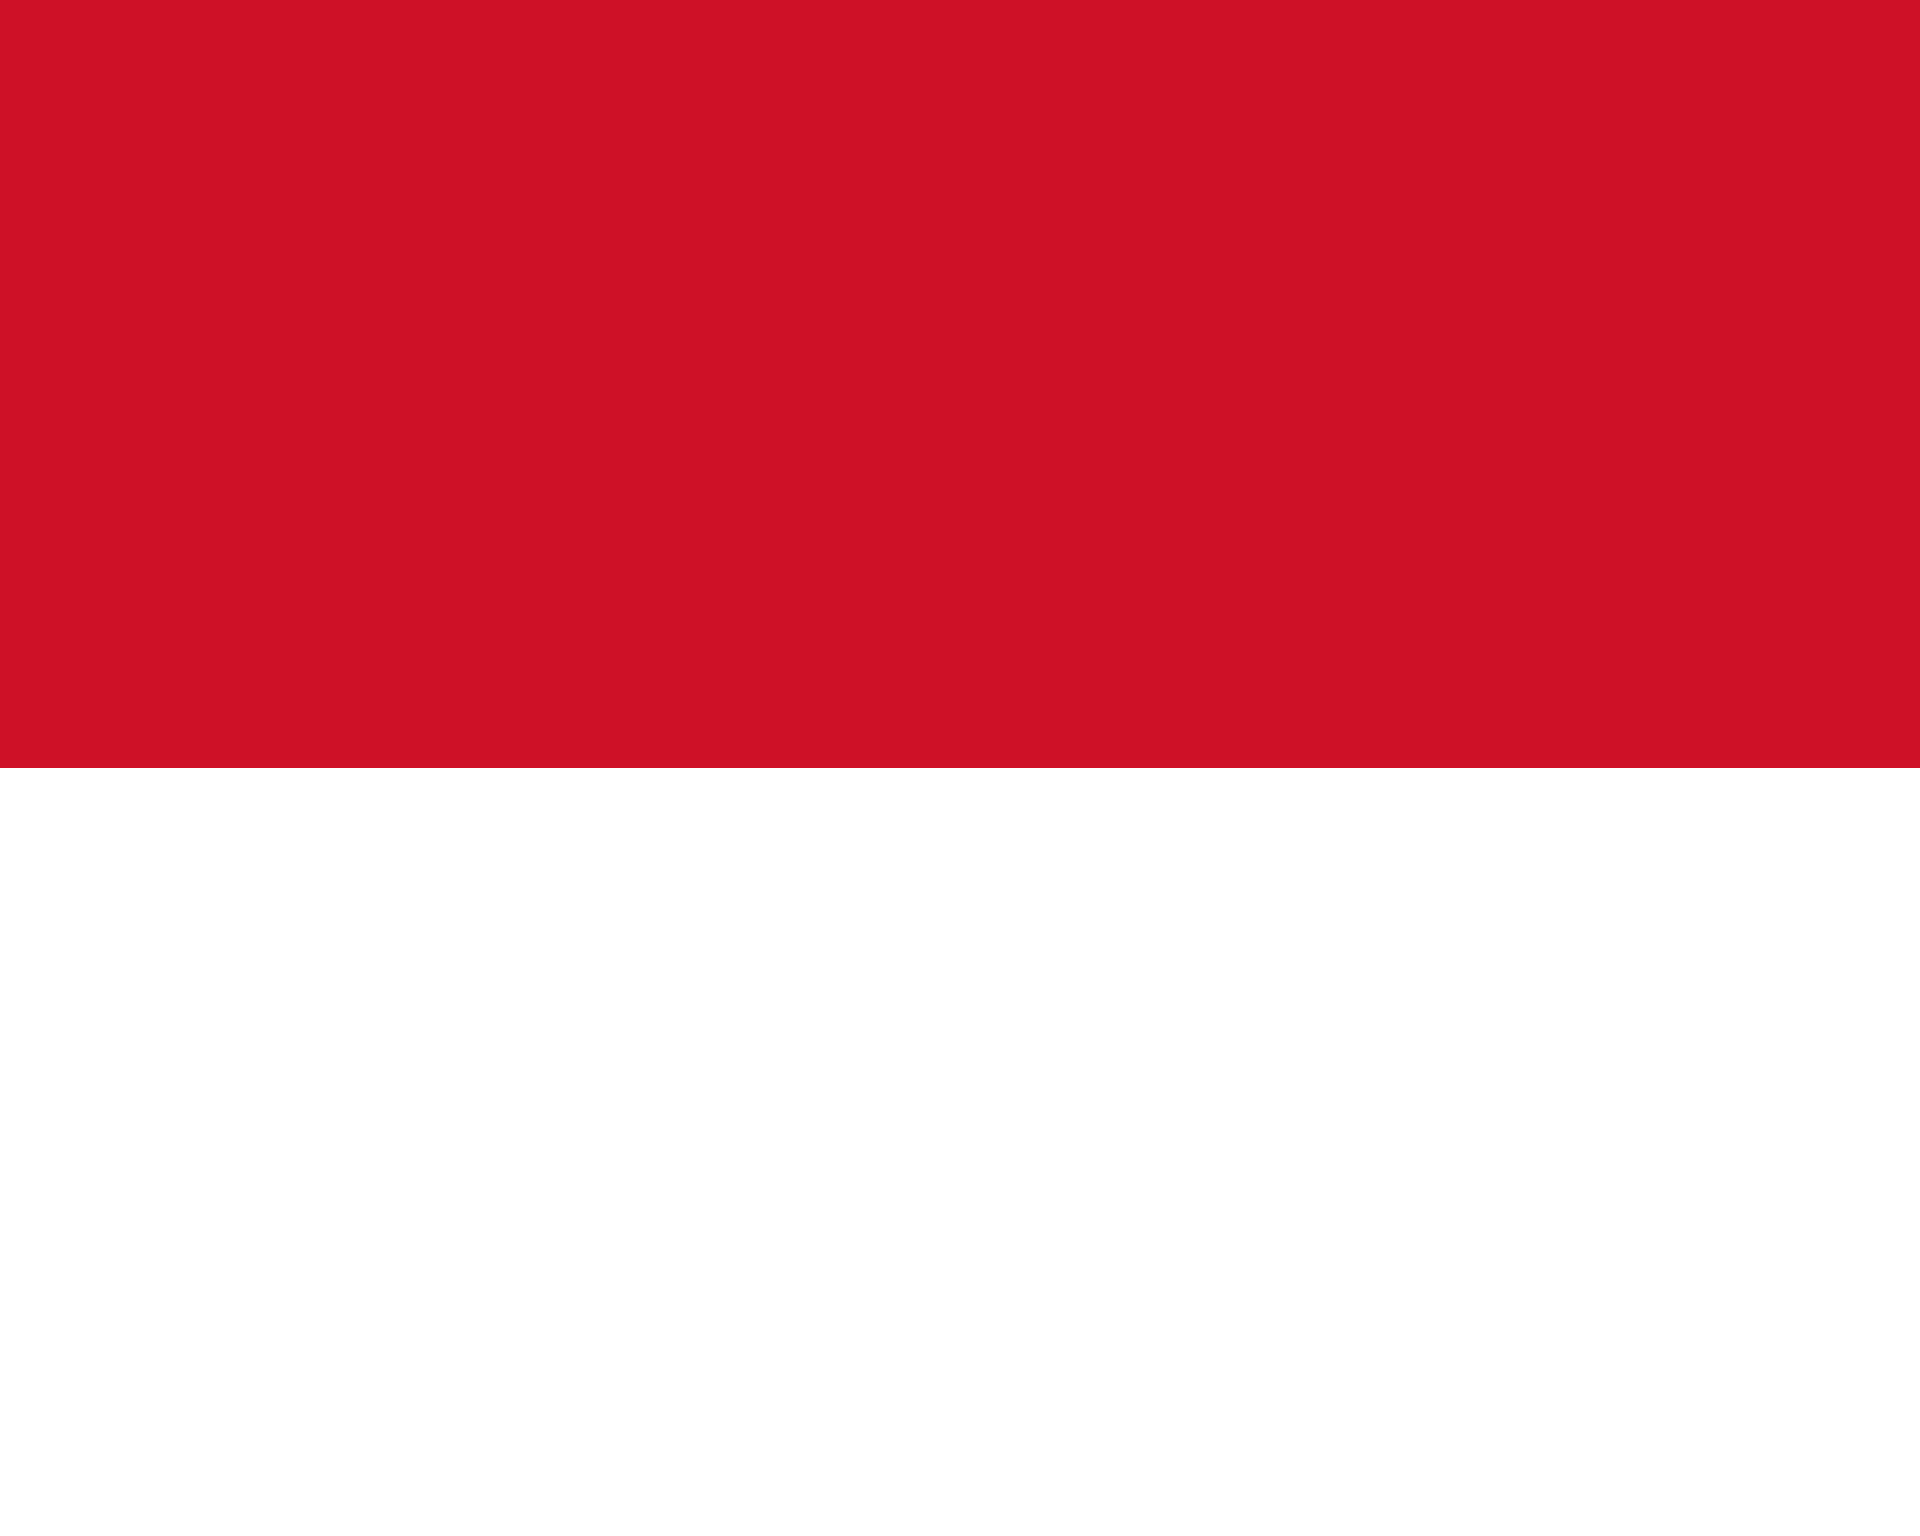  Flag  of Monaco  Wikipedia